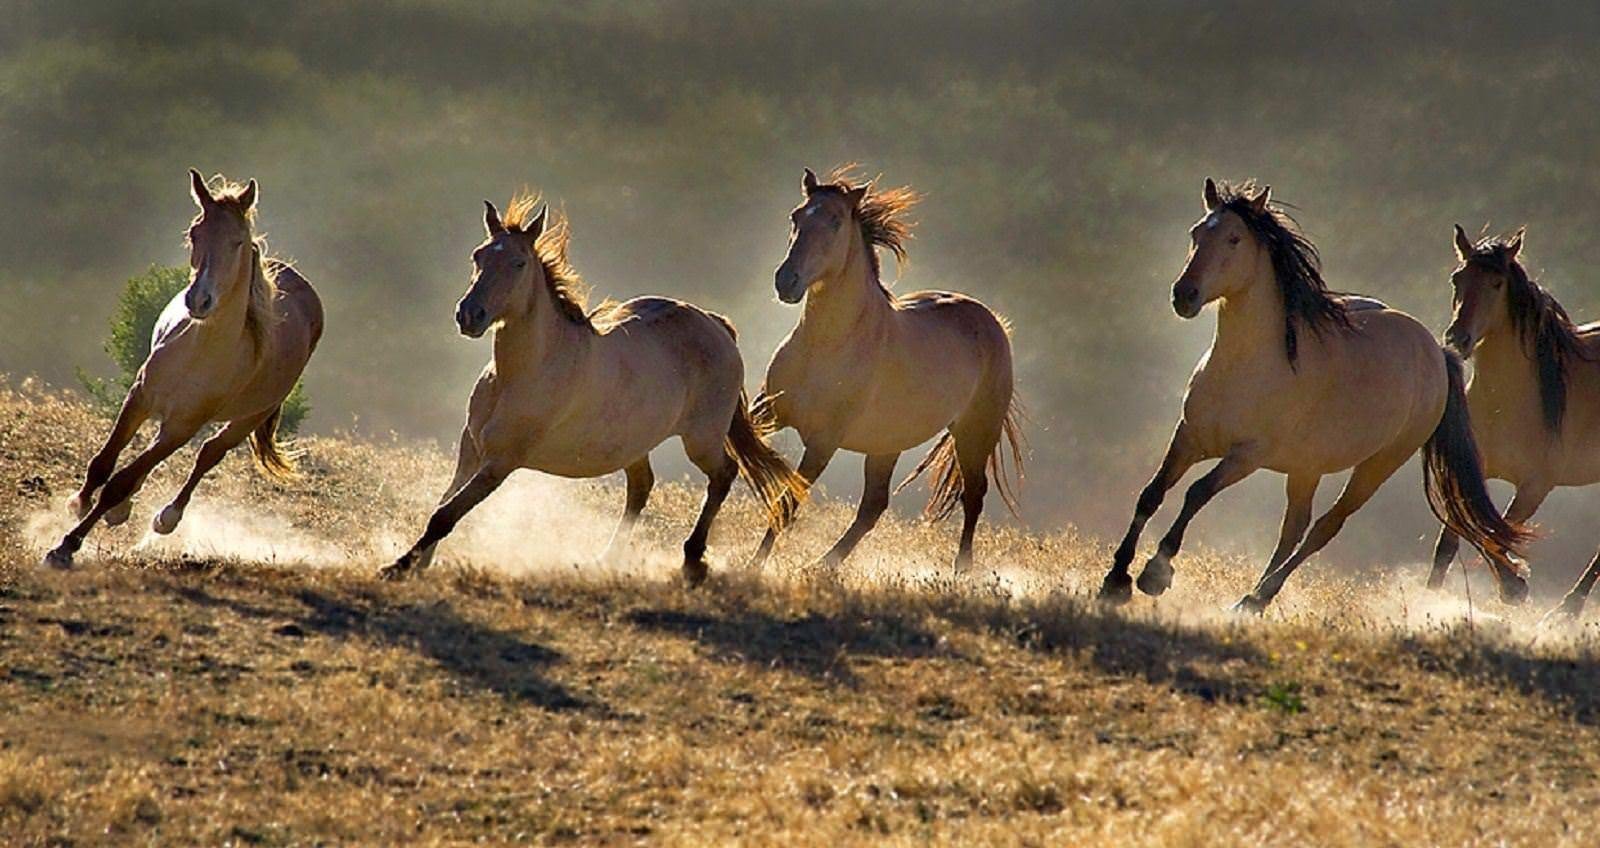 Мустанги дикие лошади. Дикие лошади Мустанги в дикой природе. Мустанги лошади в дикой природе. Мустанги лошади табун. Табун диких лошадей мустангов.